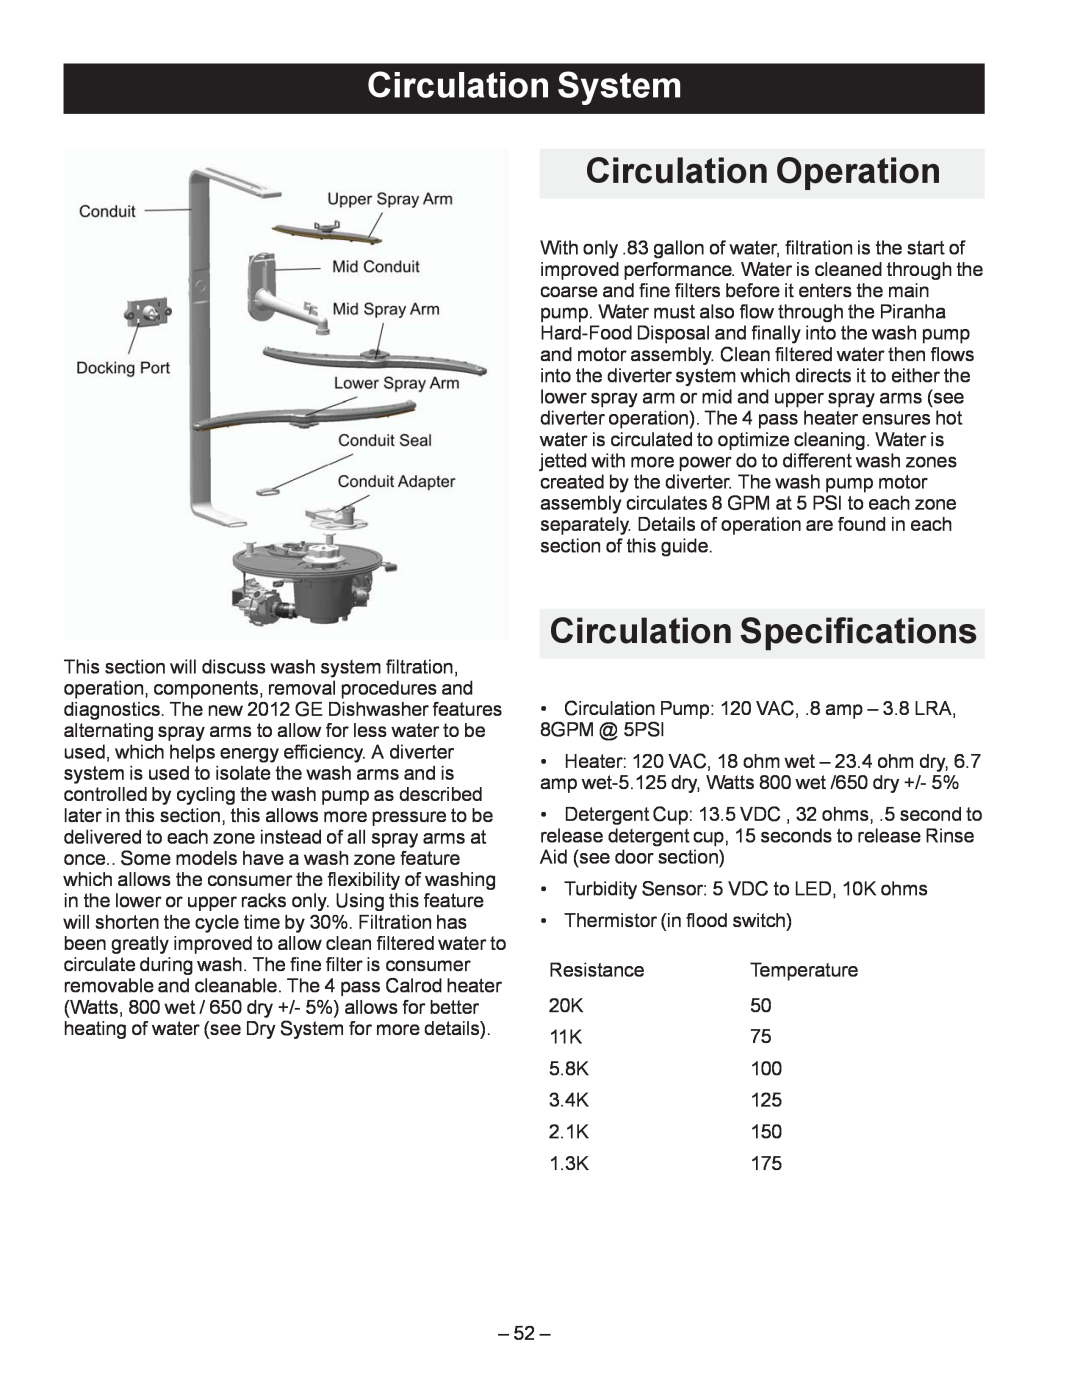 GE GDF520PGD Circulation System, Circulation Operation, Circulation Specifications, ±  ±, ‡7KHUPLVWRU LQ IORRG VZLWFK 